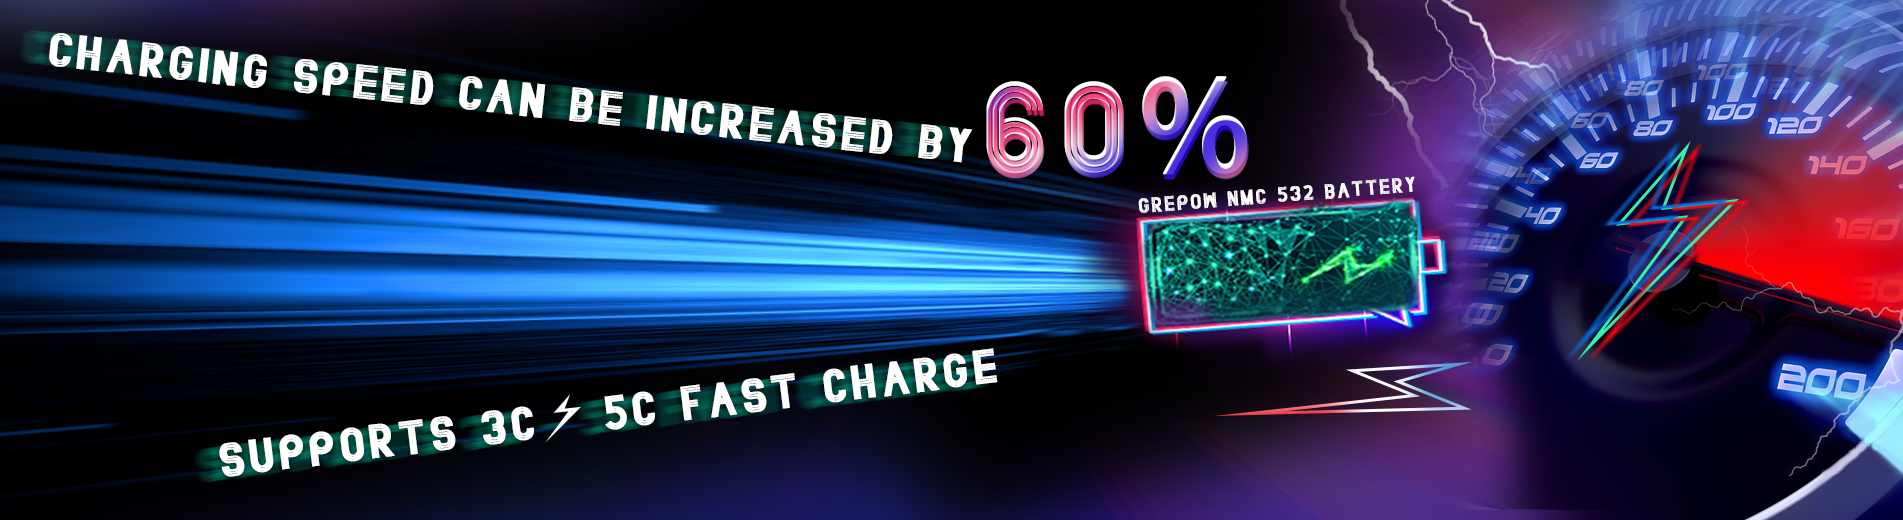 NMC 532 fast charge lipo battery pack from grepow & tattu